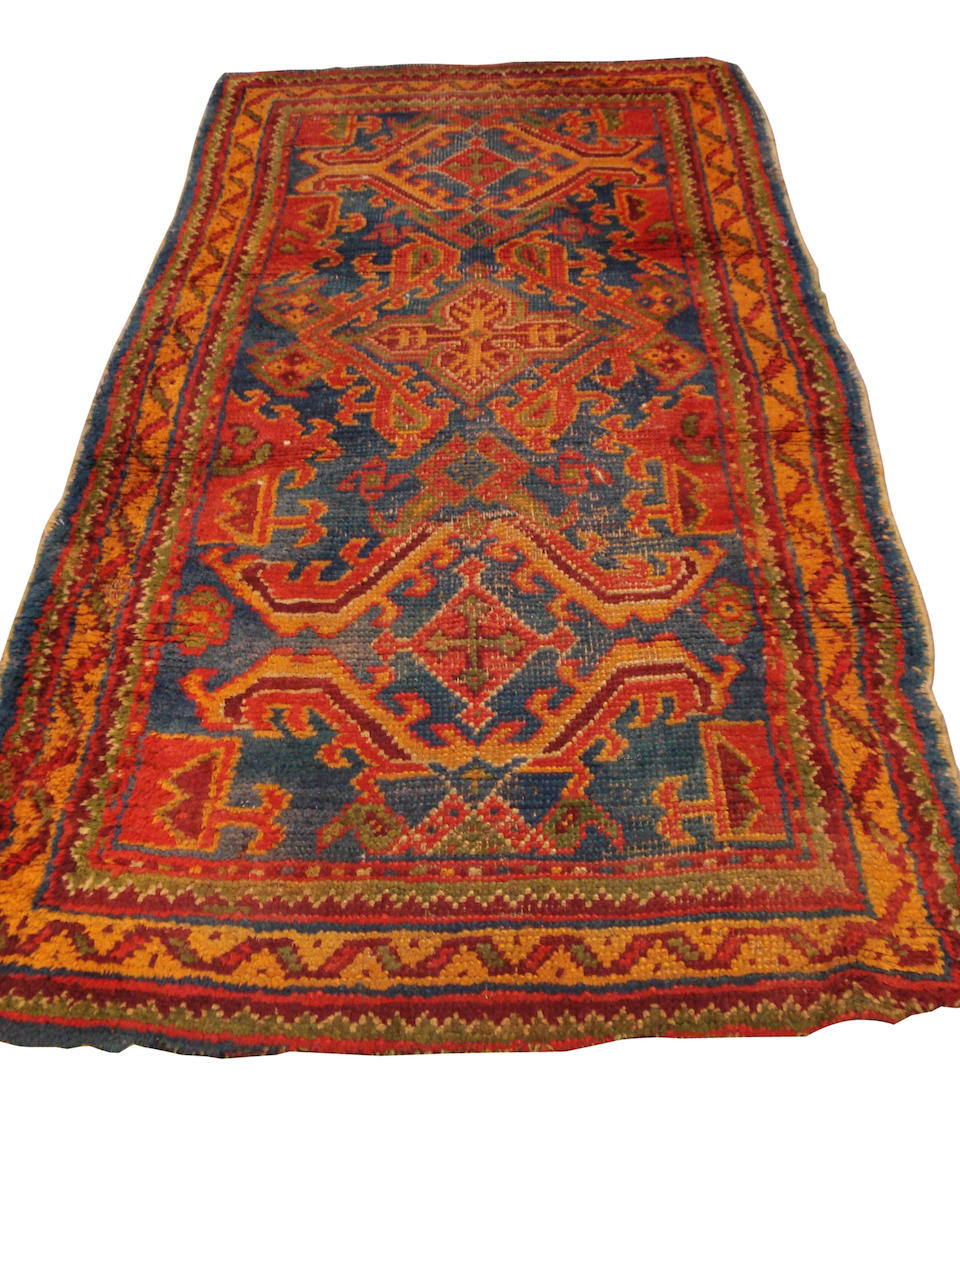 An Ushak rug West Anatolia, 7 ft x 3 ft 5 in (214 x 104 cm) some wear